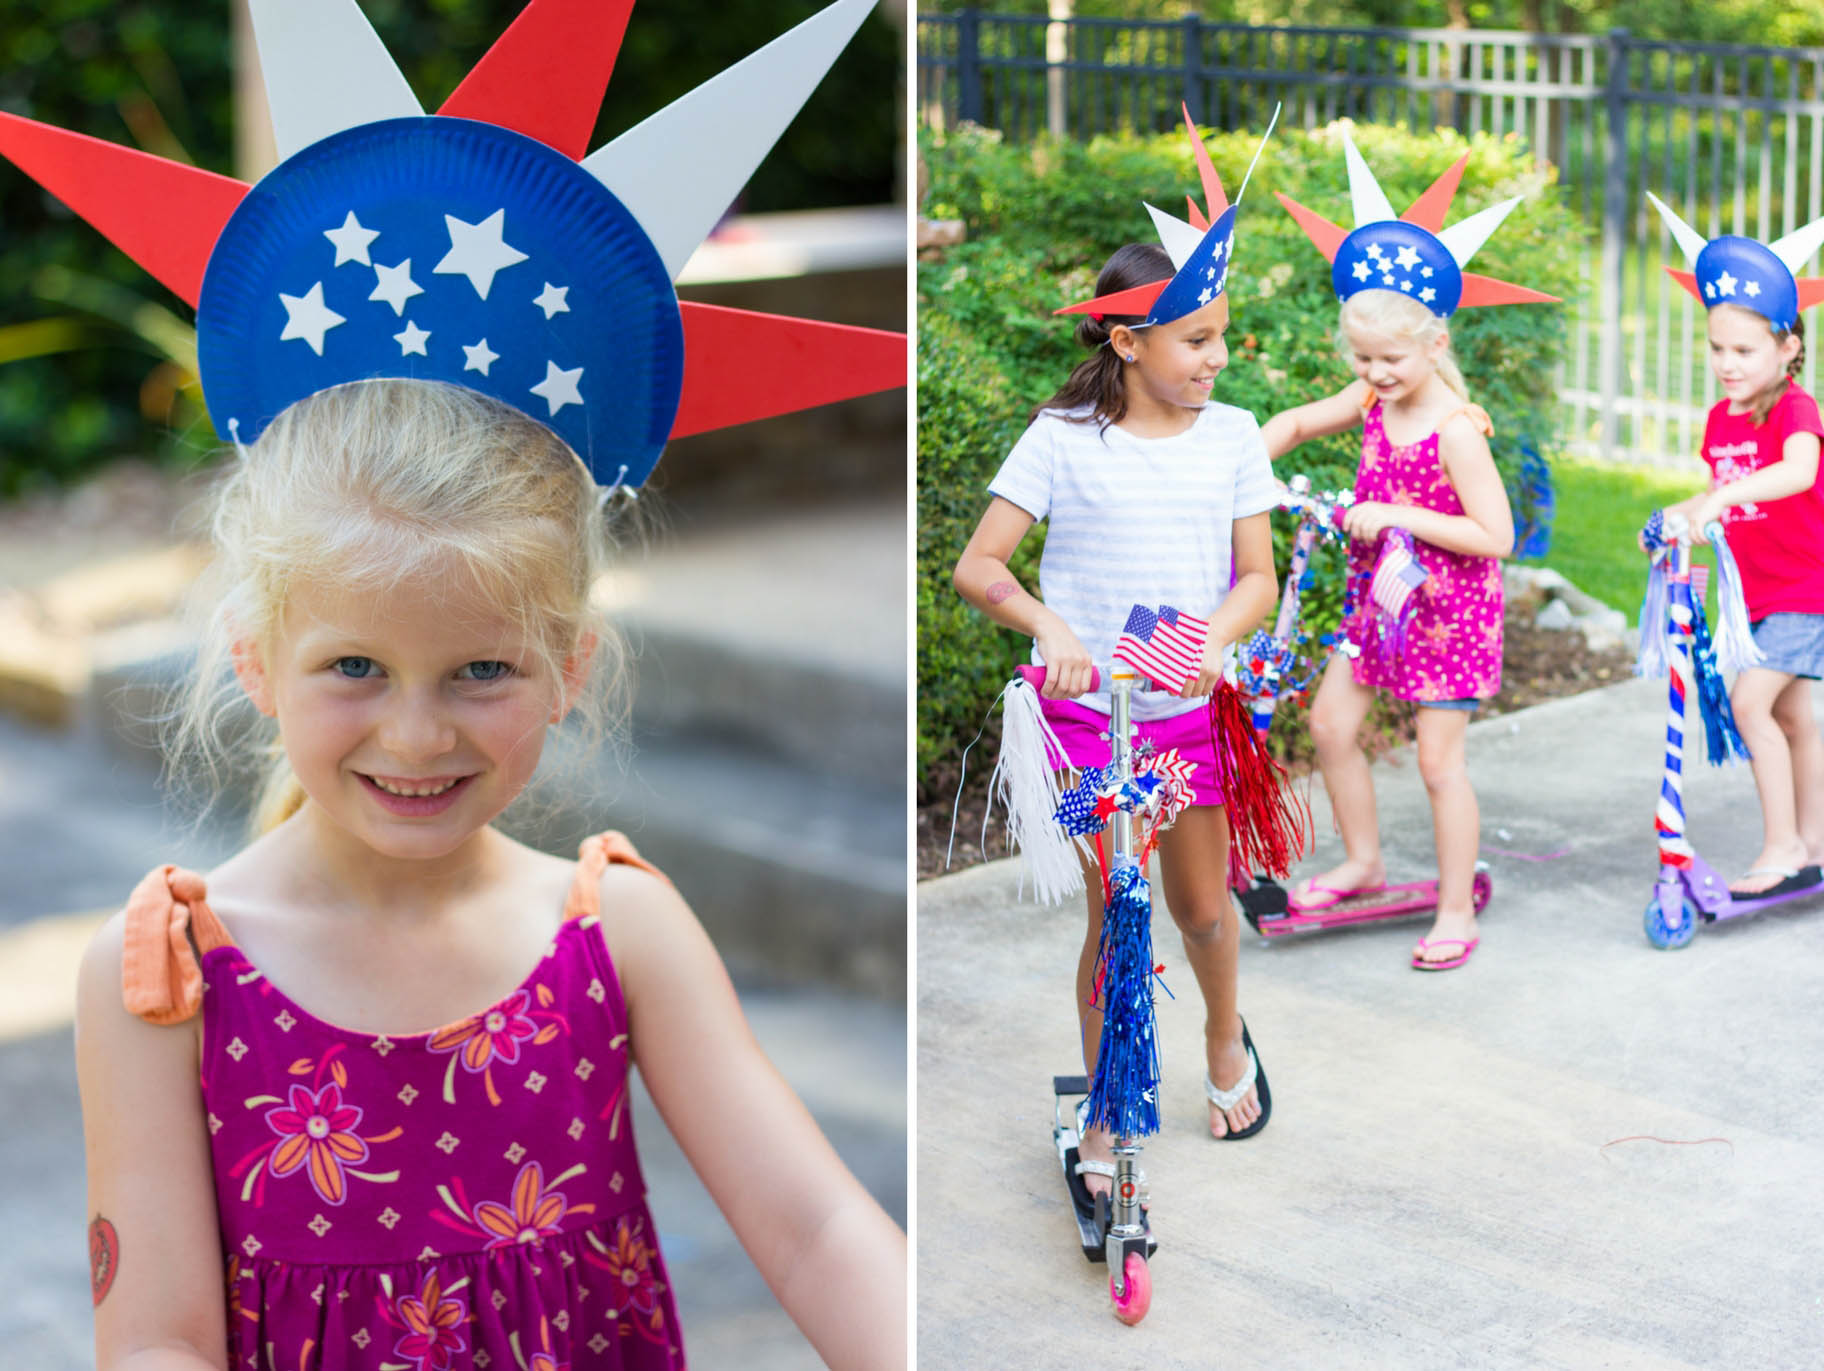 American Flag Patriotic Bike Parade Decorations 